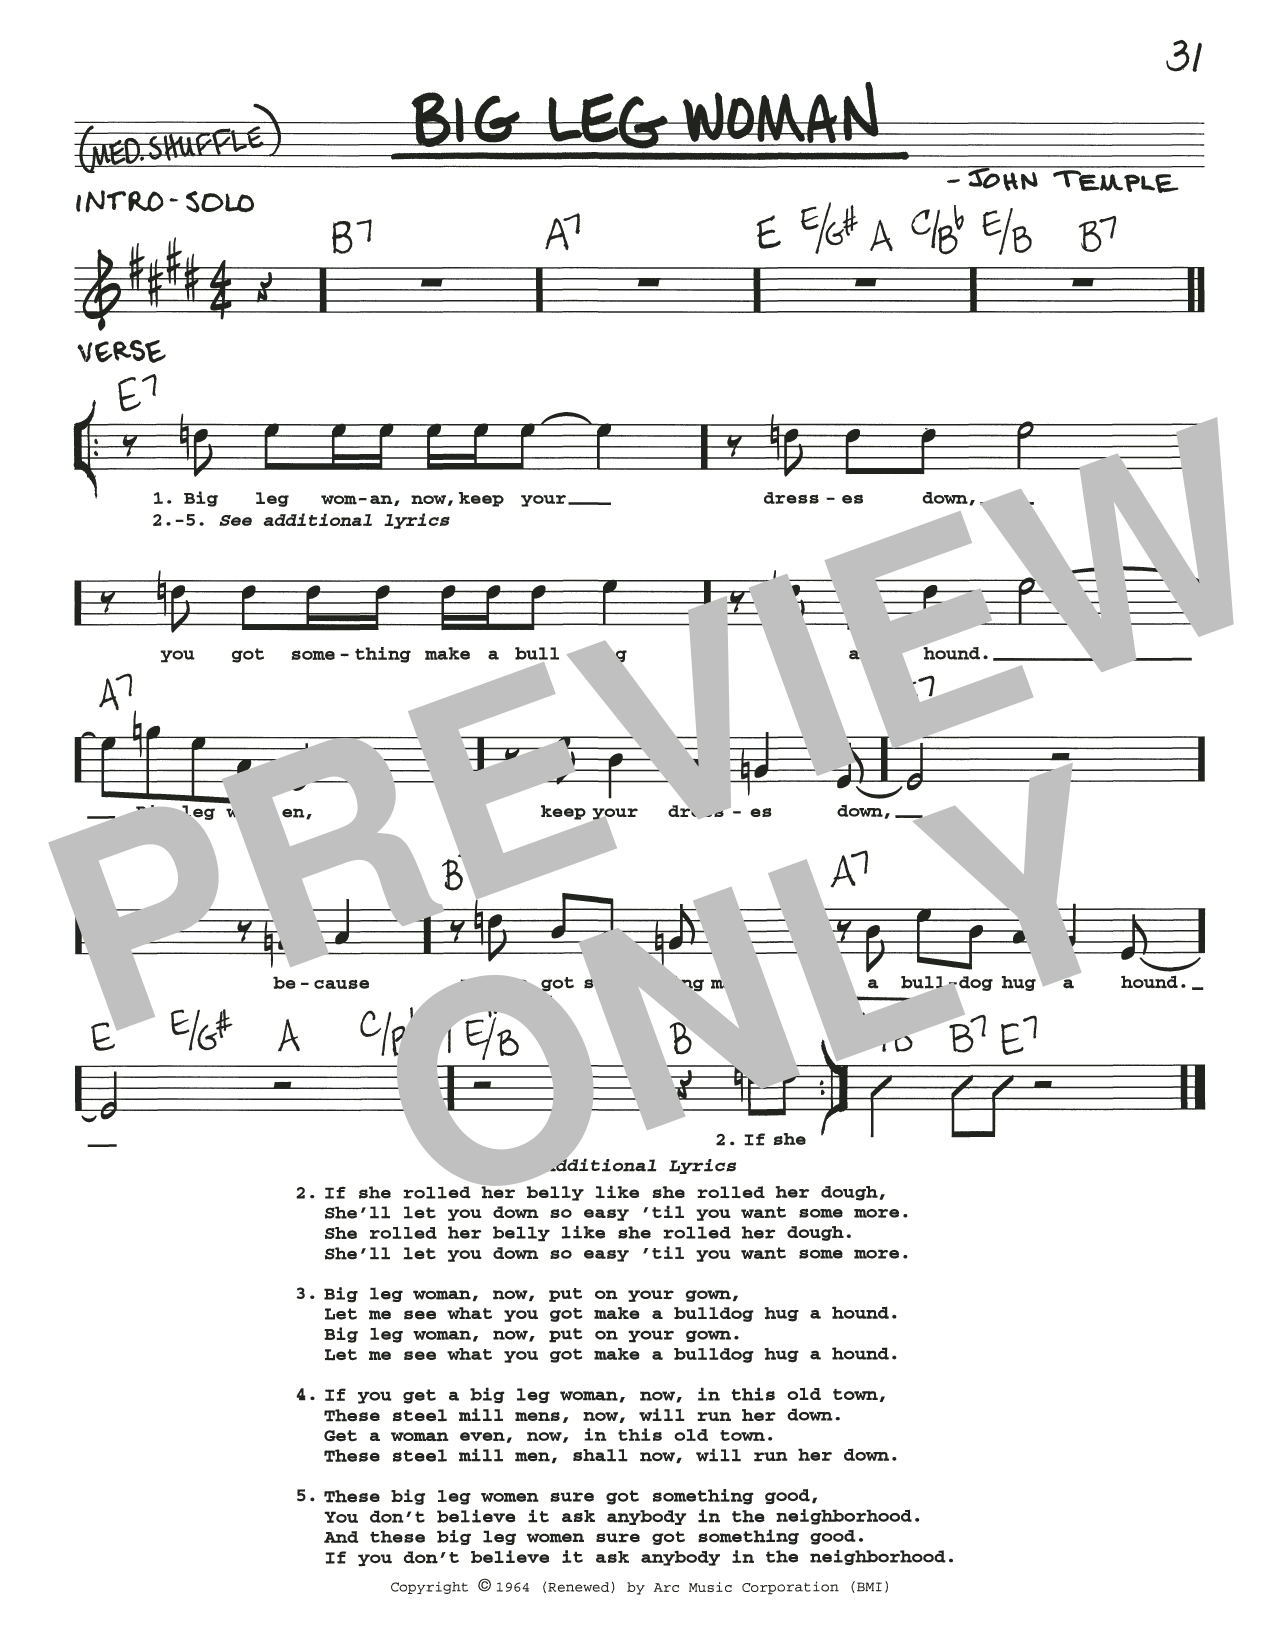 Muddy Waters Big Leg Woman Sheet Music Notes & Chords for Real Book – Melody, Lyrics & Chords - Download or Print PDF